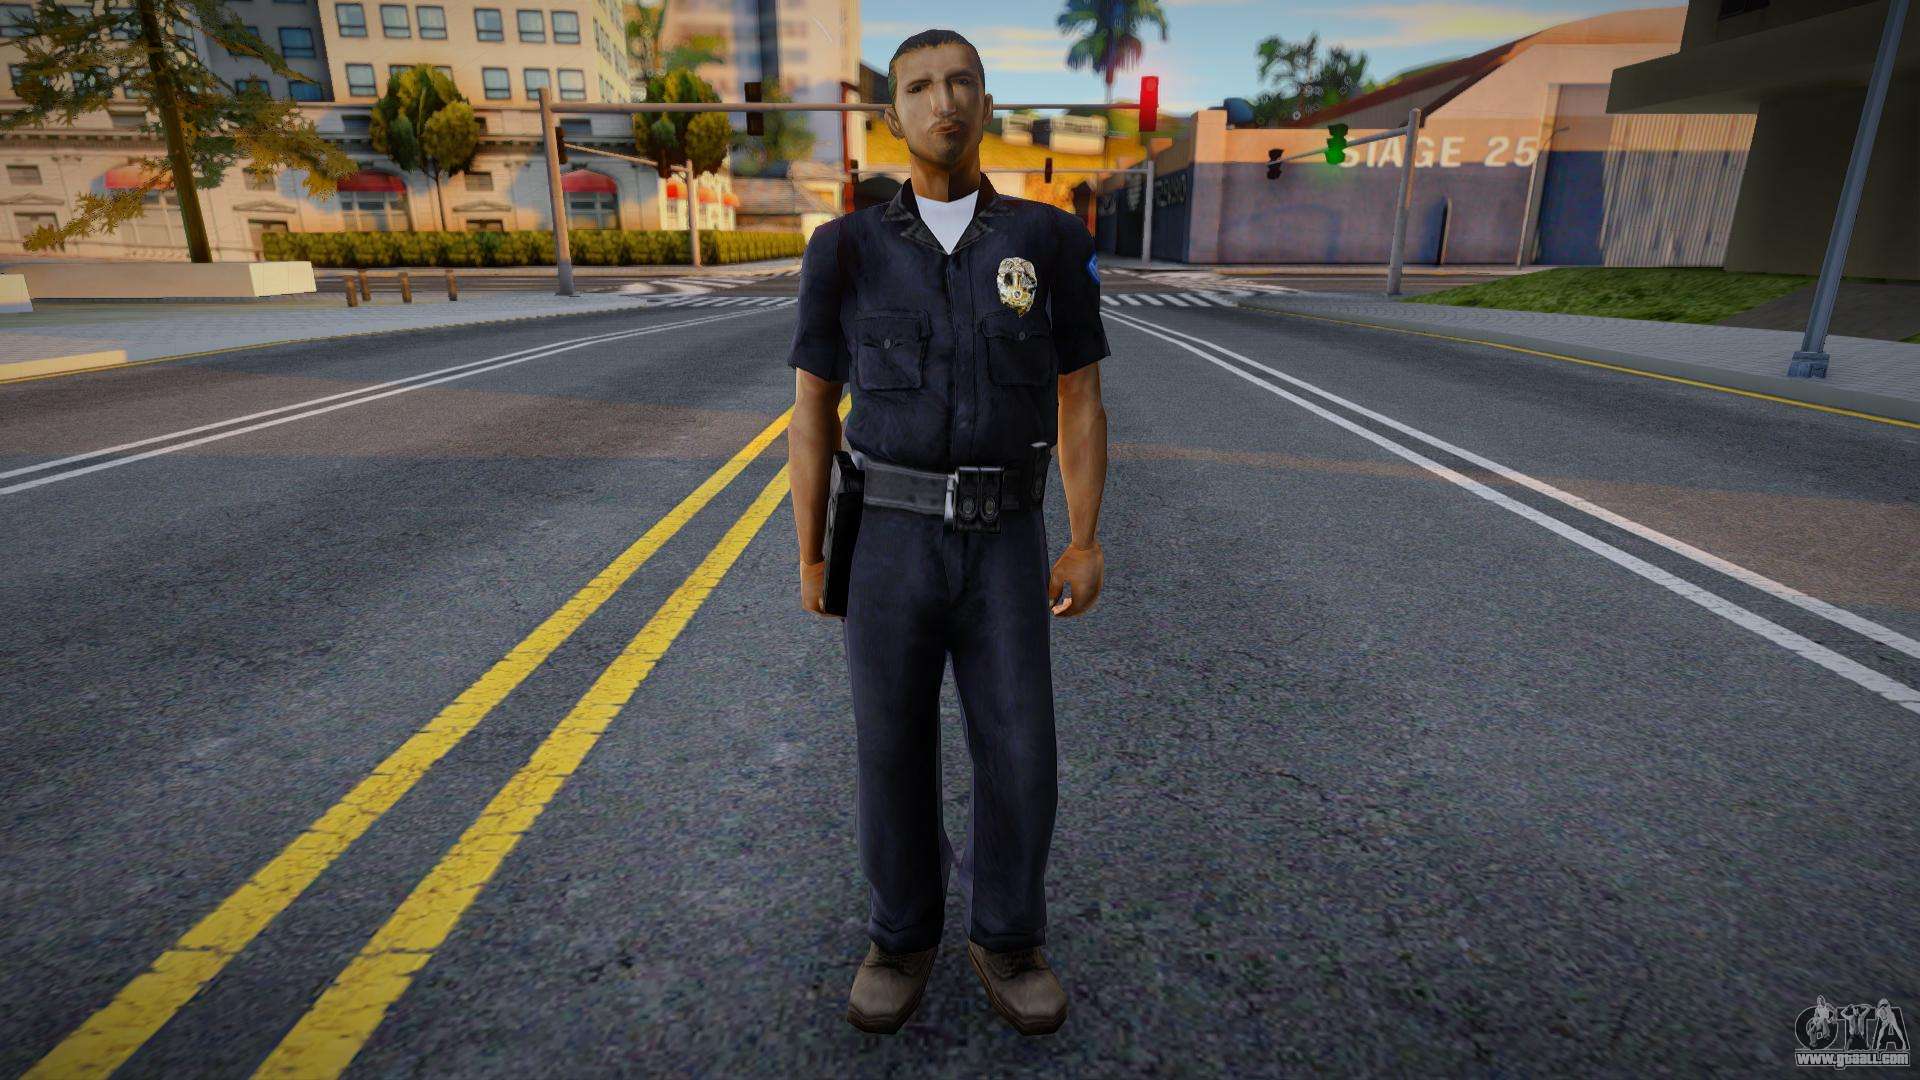 Jimmy Hernandez HD for GTA San Andreas